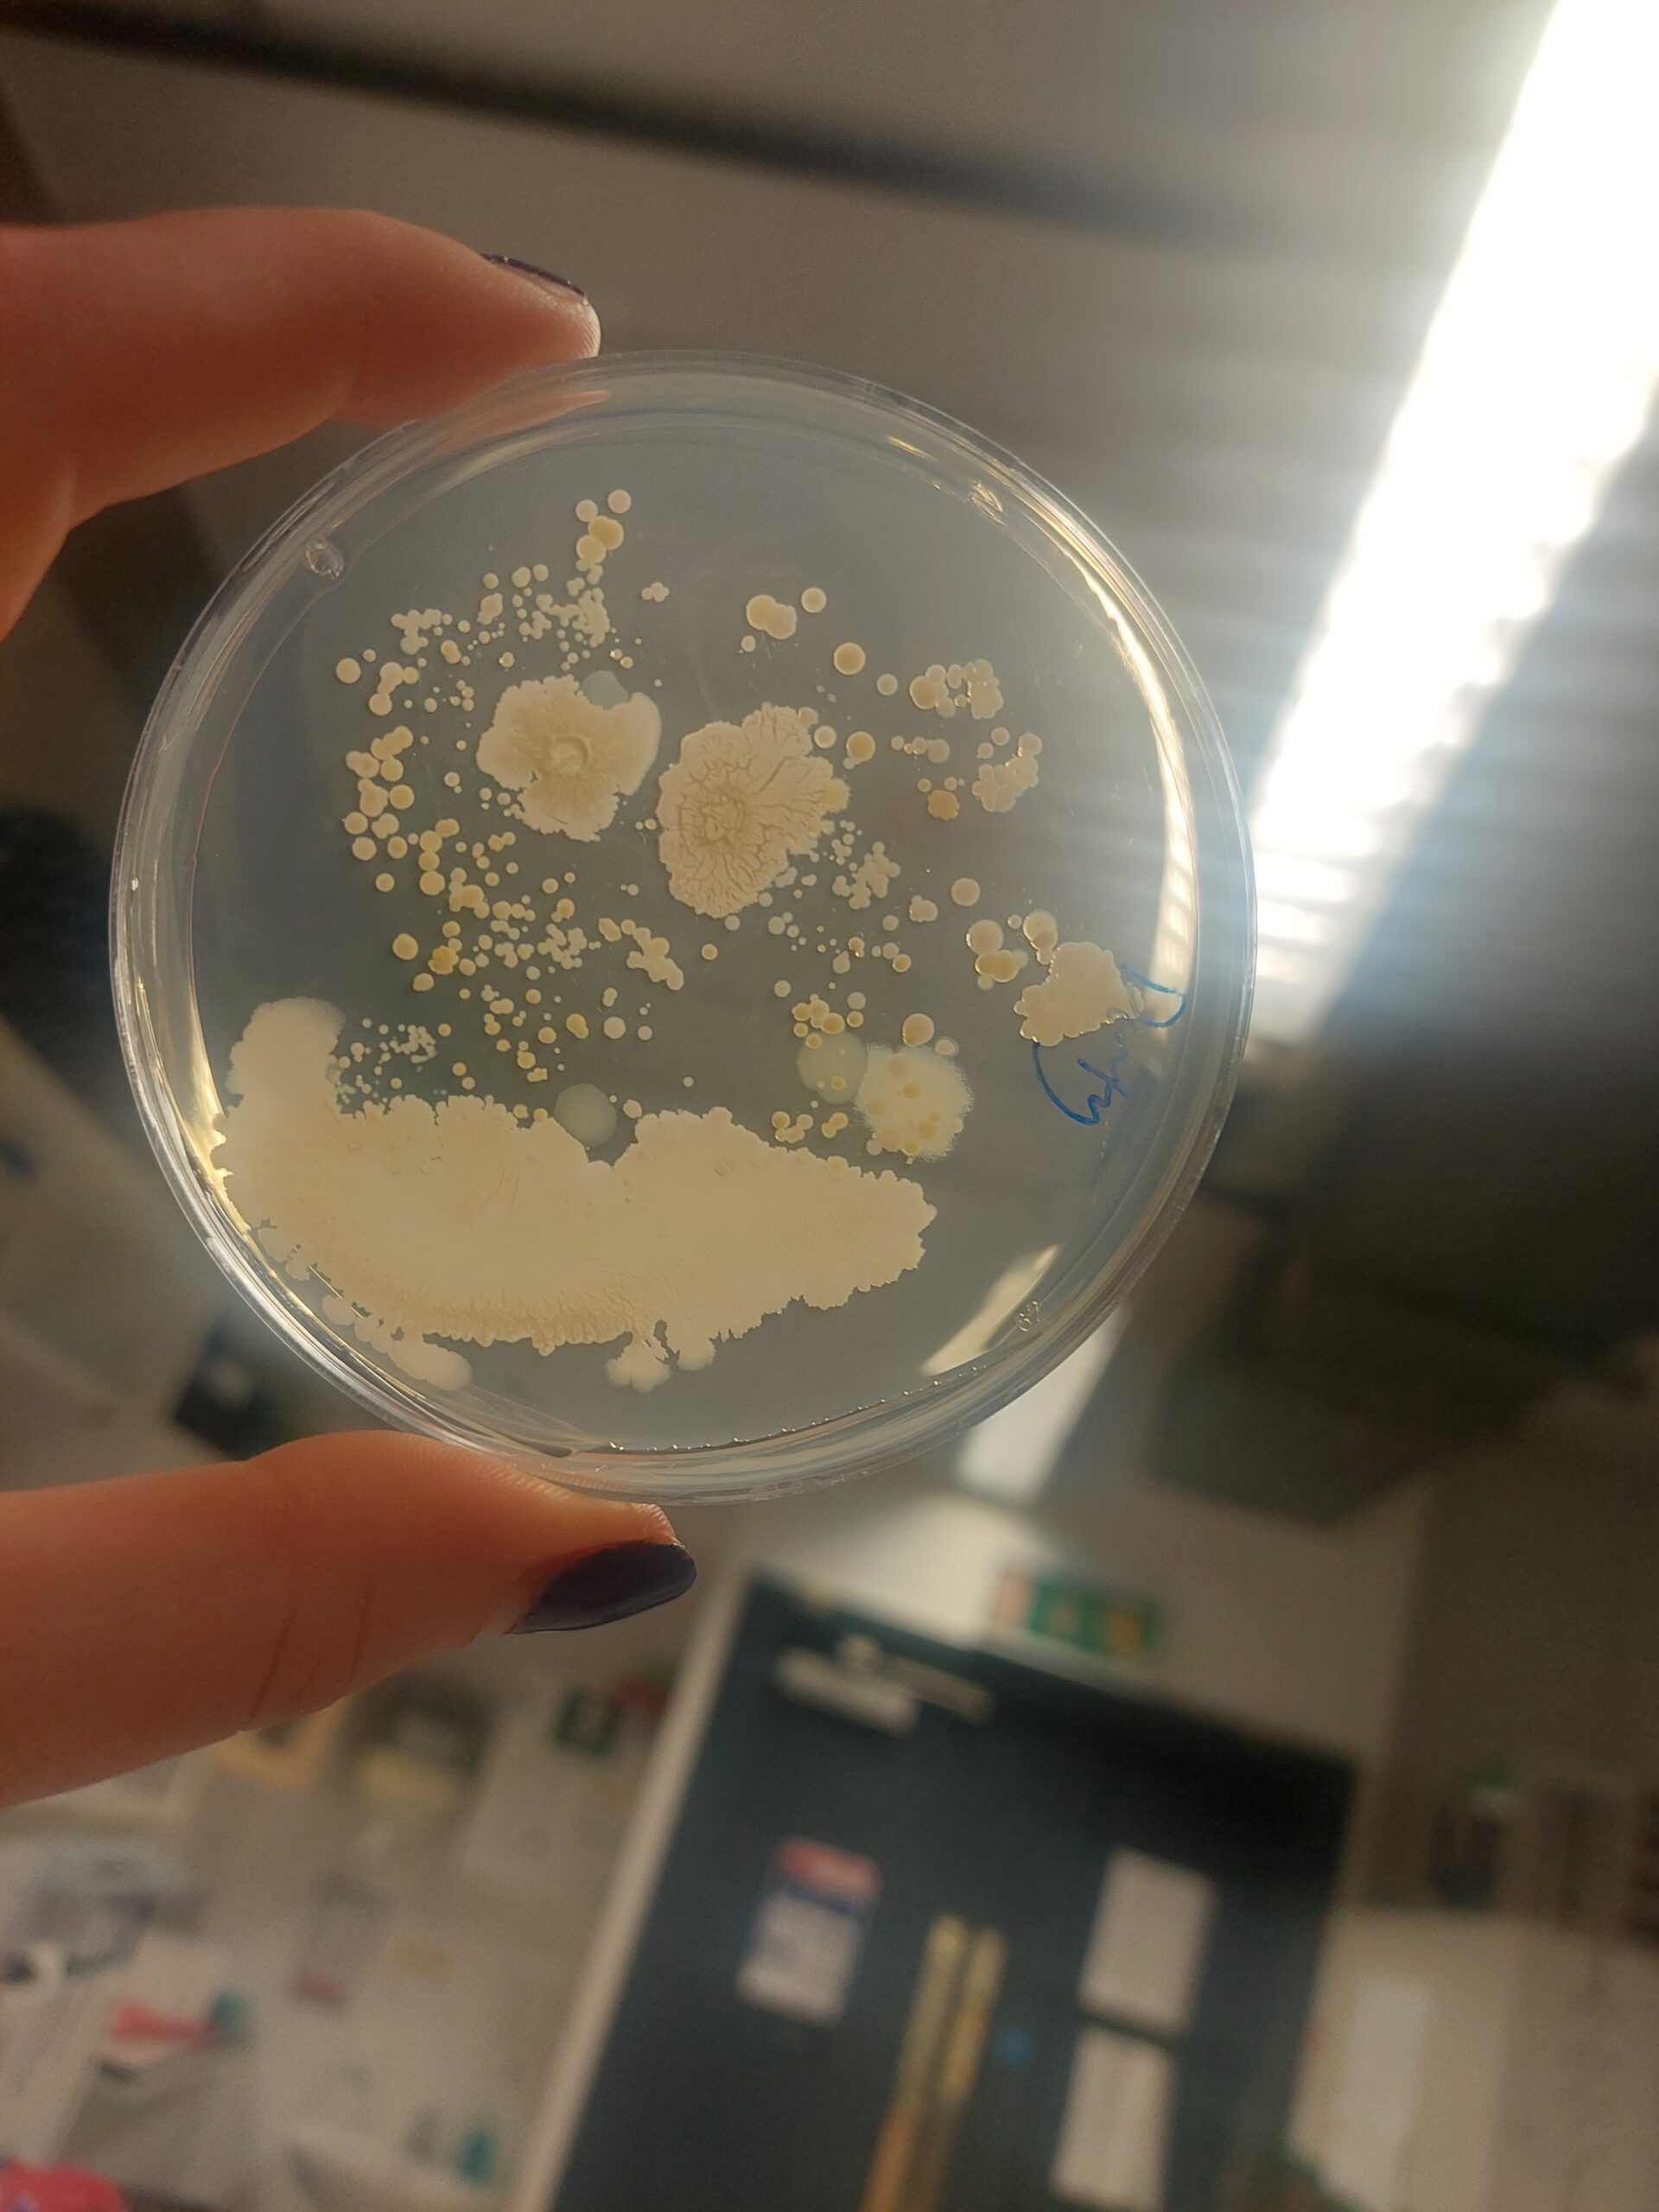 Petri dish showing lots of bacteria before hand washing.